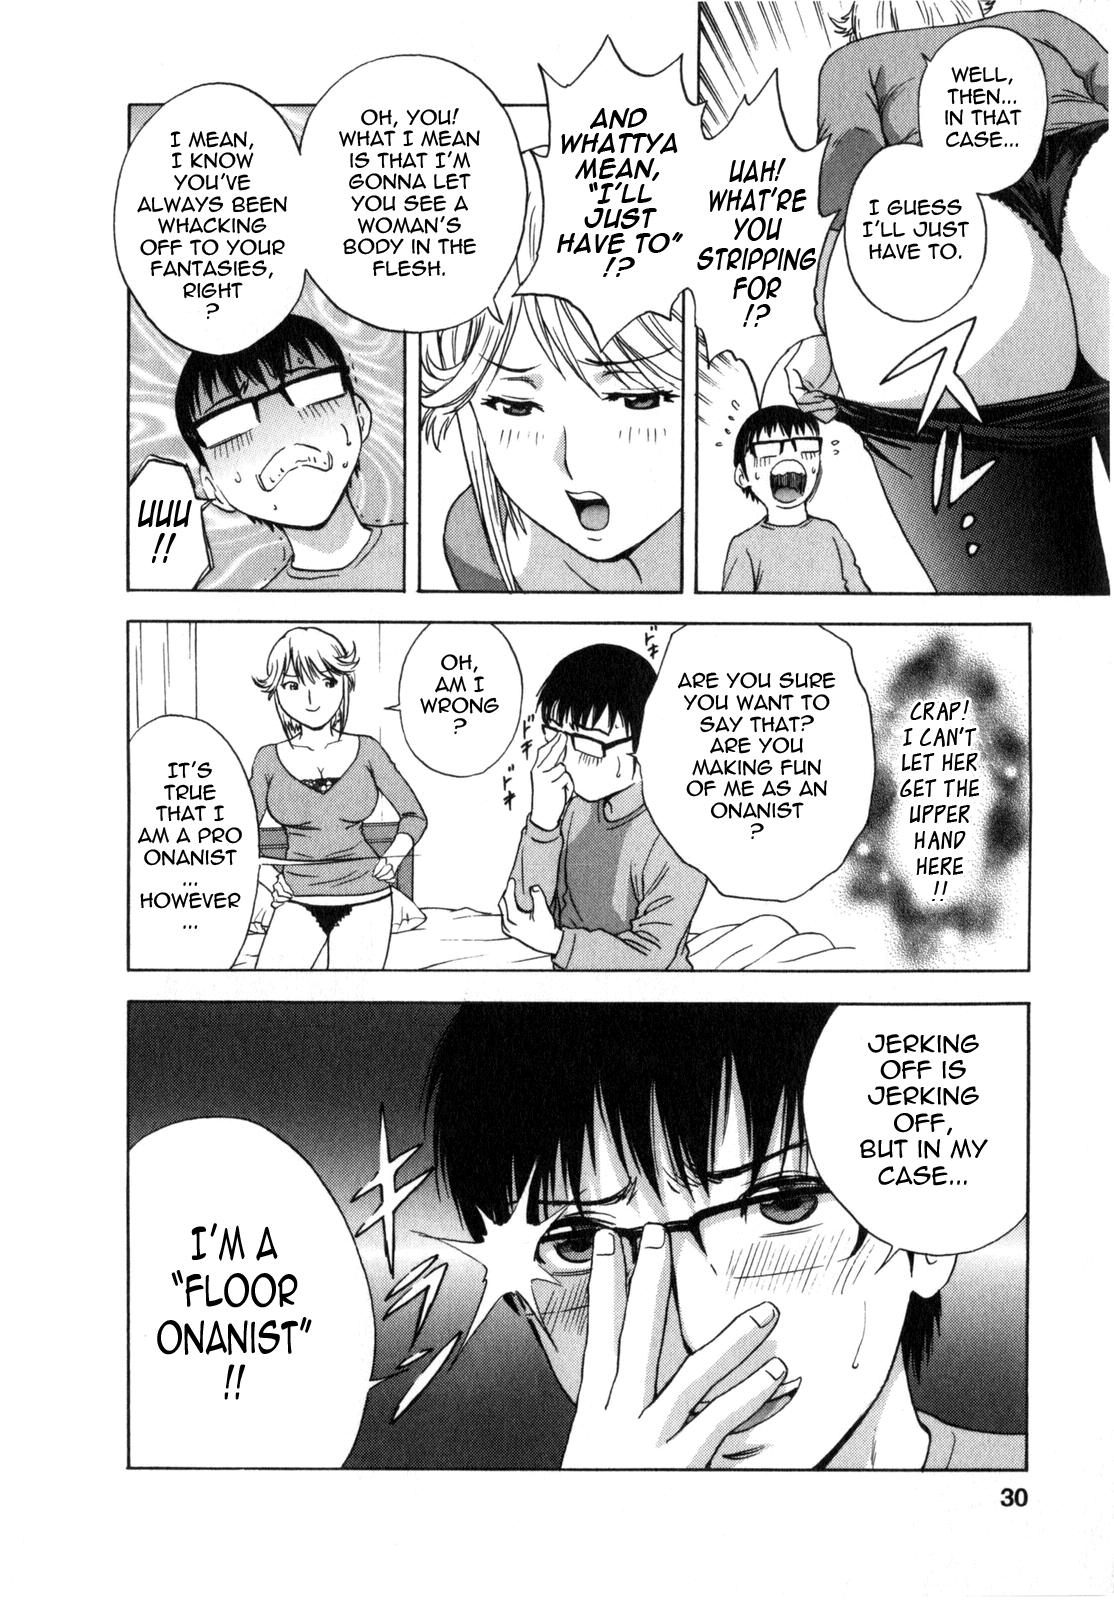 [Hidemaru] Life with Married Women Just Like a Manga 1 - Ch. 1-8 [English] {Tadanohito} 31